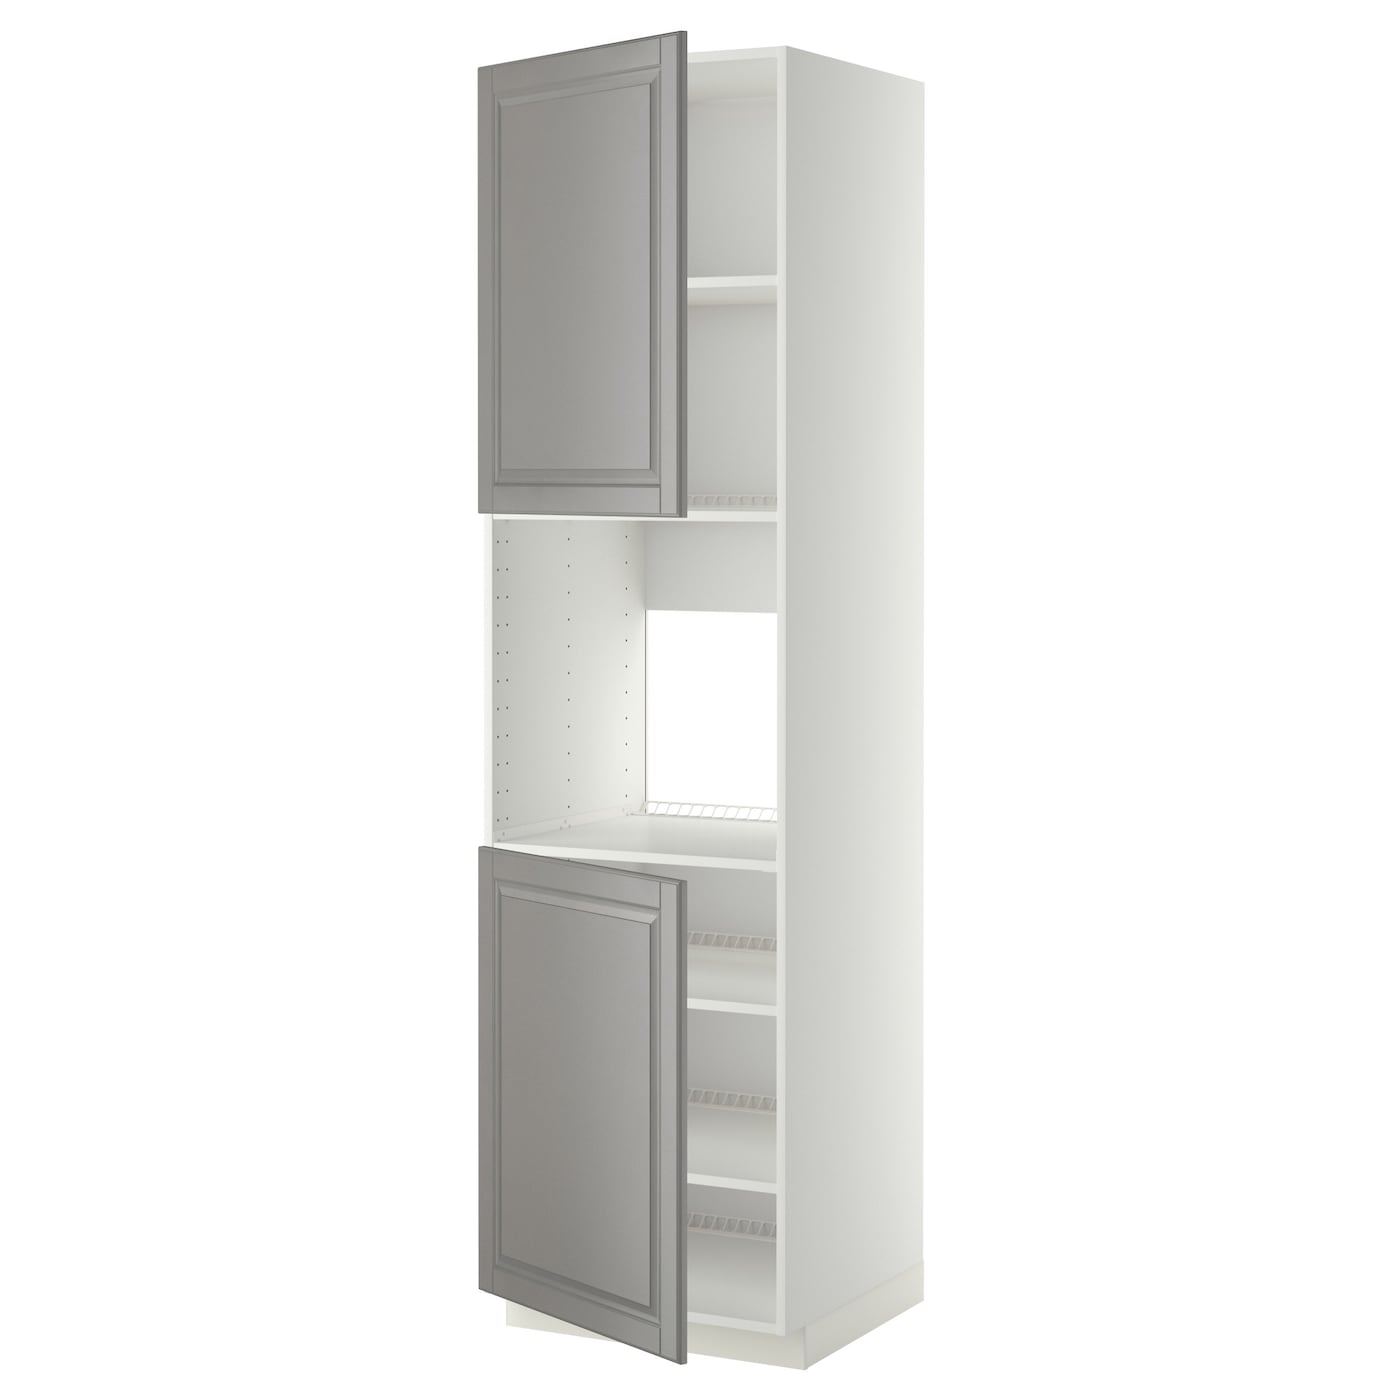 Высокий кухонный шкаф с полками - IKEA METOD/МЕТОД ИКЕА, 220х60х60 см, белый/серый